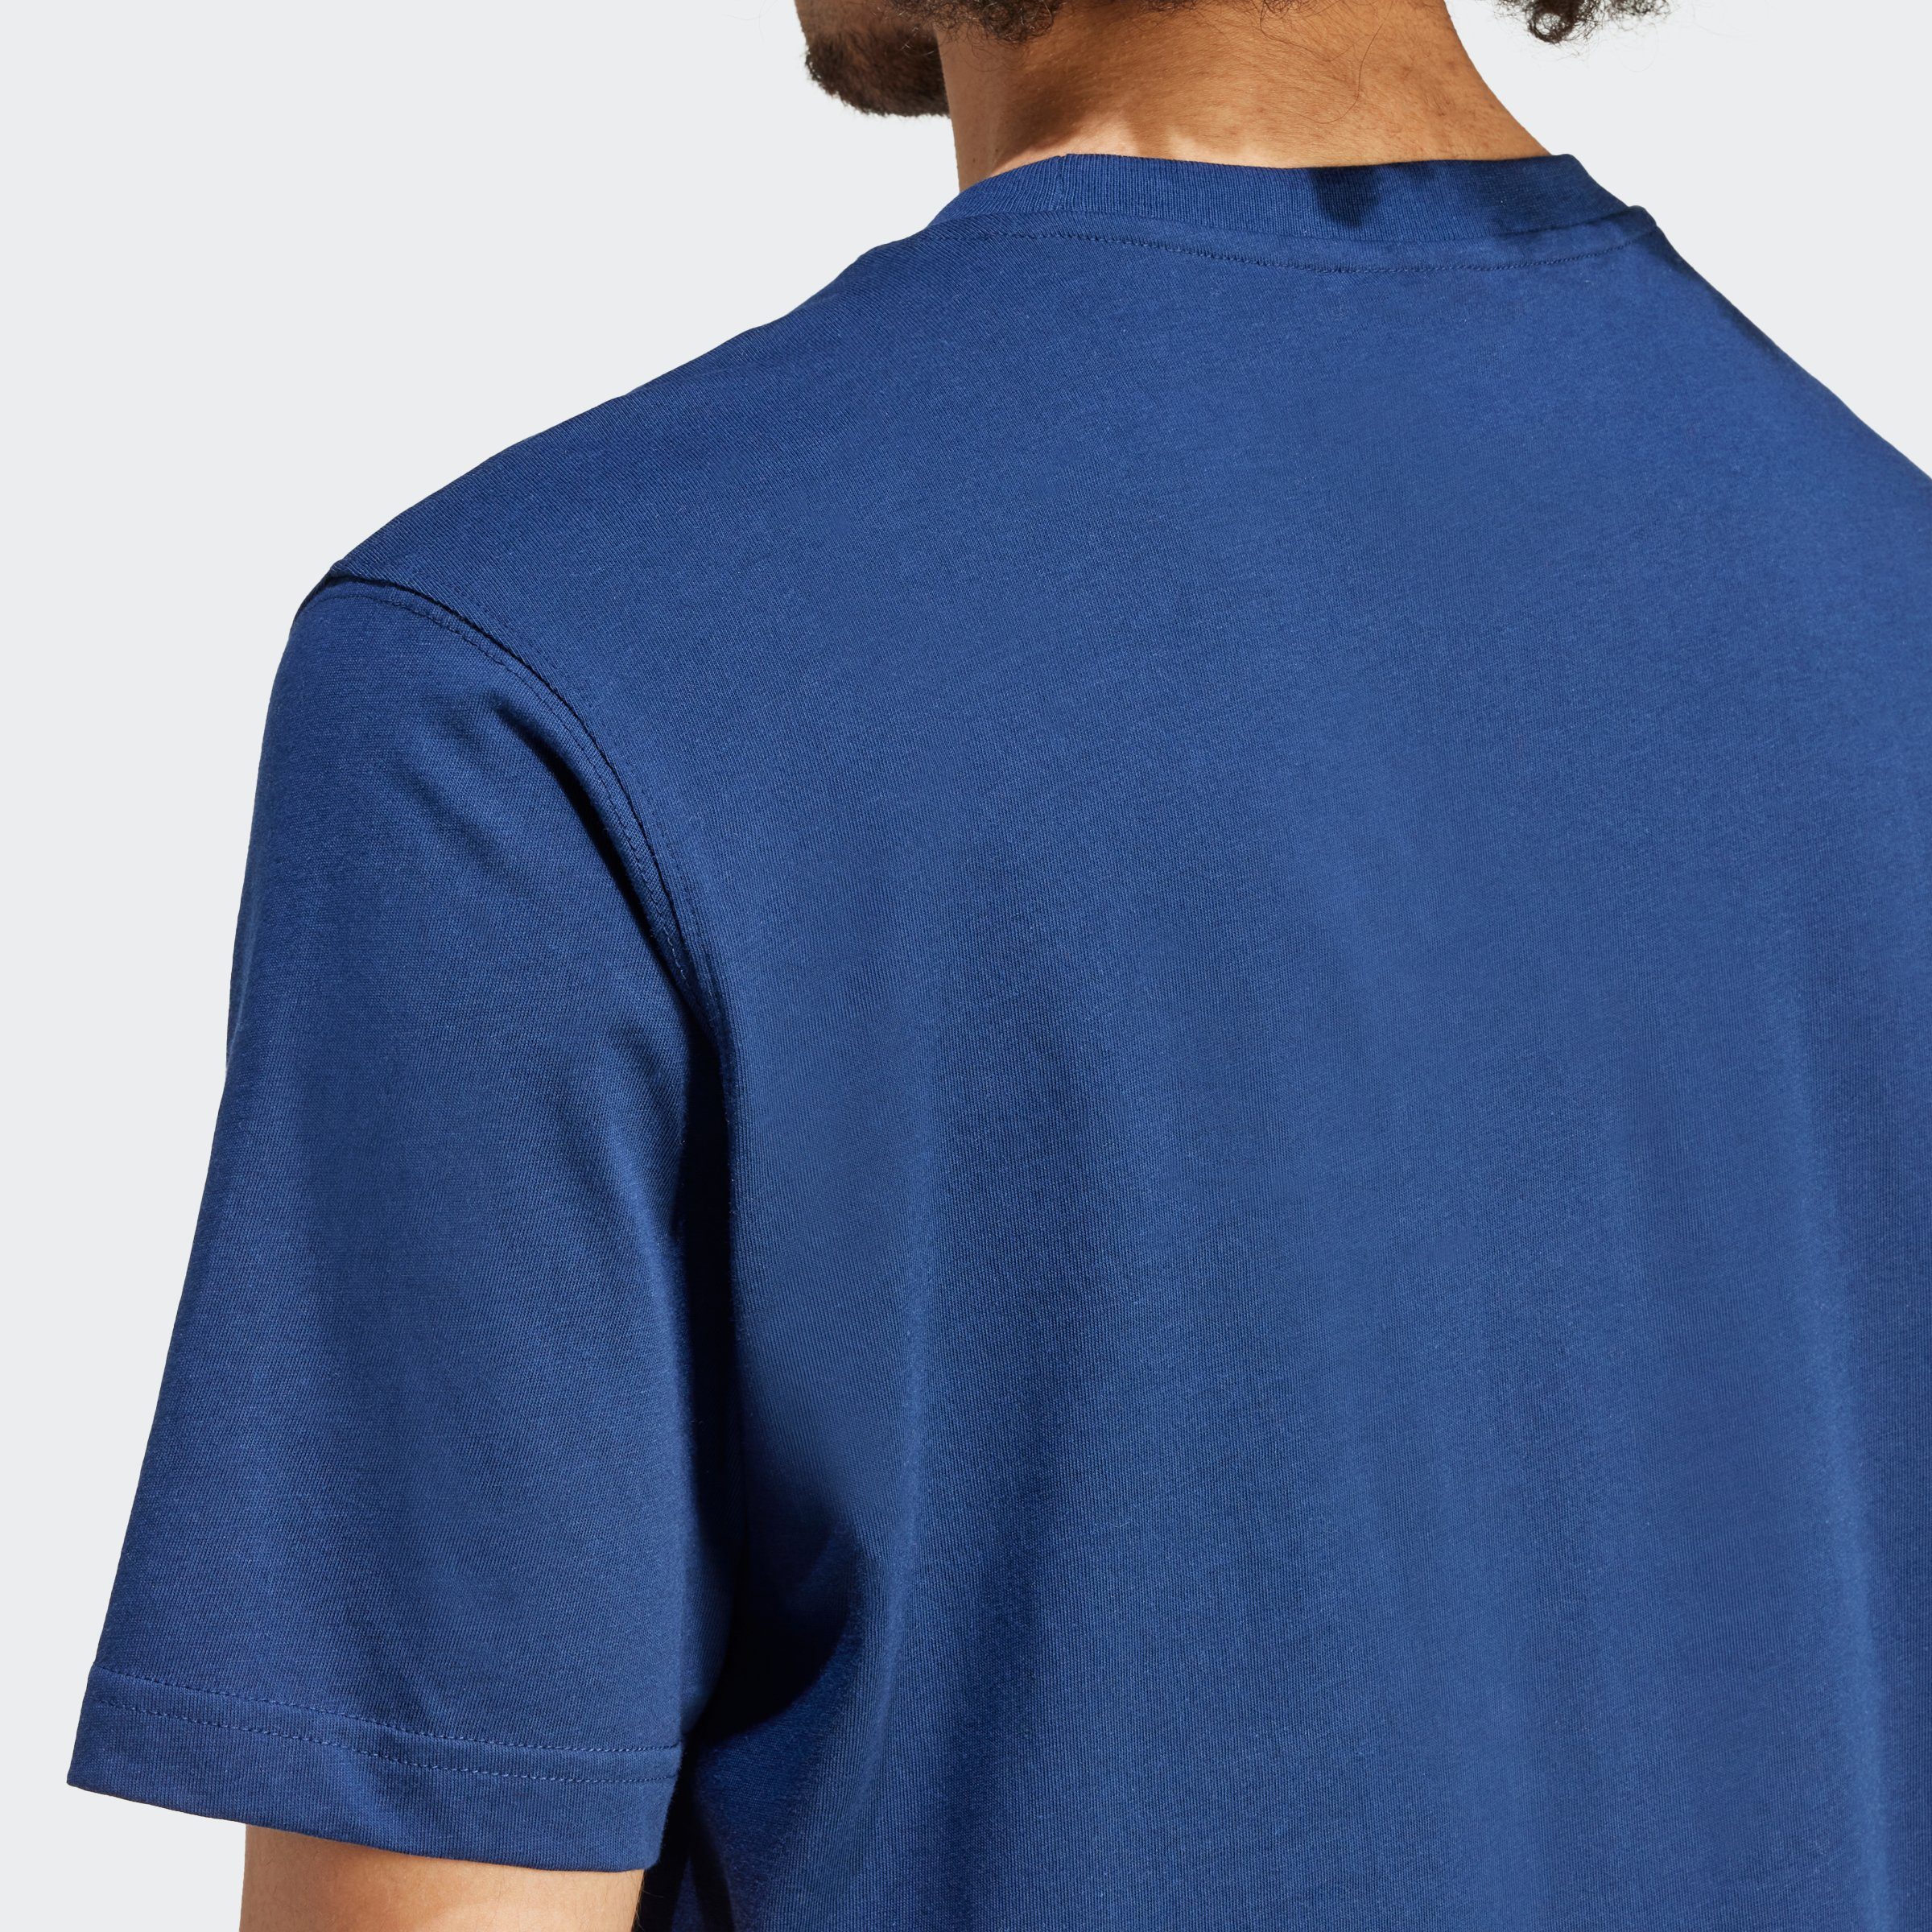 ESSENTIAL TEE Originals T-Shirt adidas NINDIG